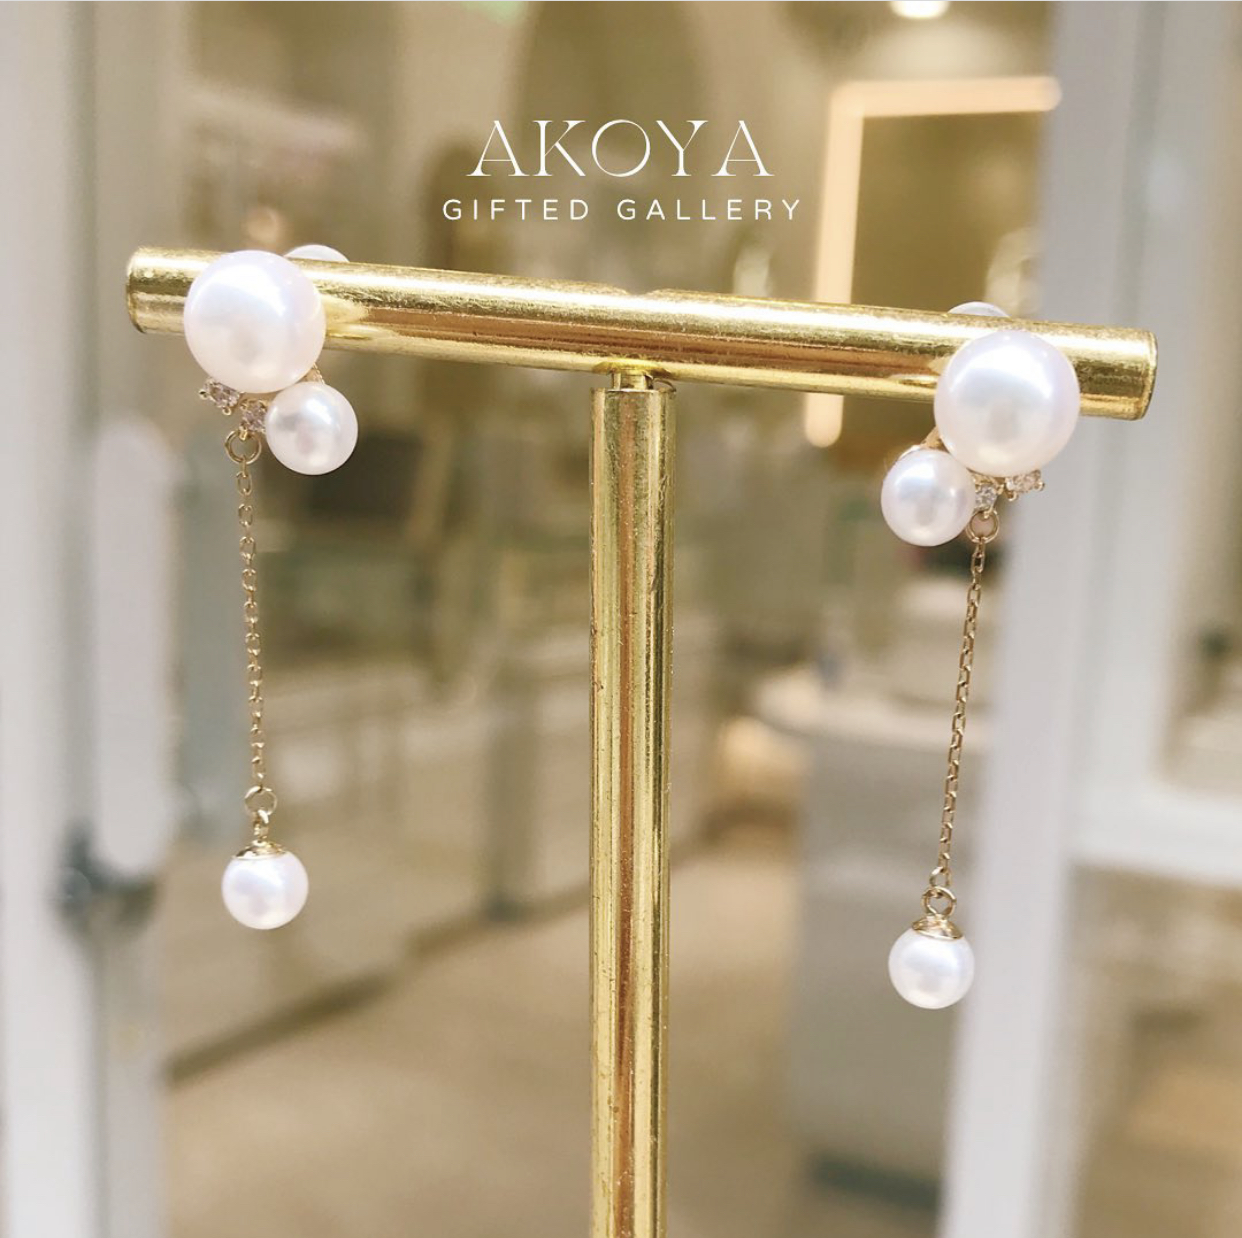 Akoya x Diamond Earrings by Gifted Gallery